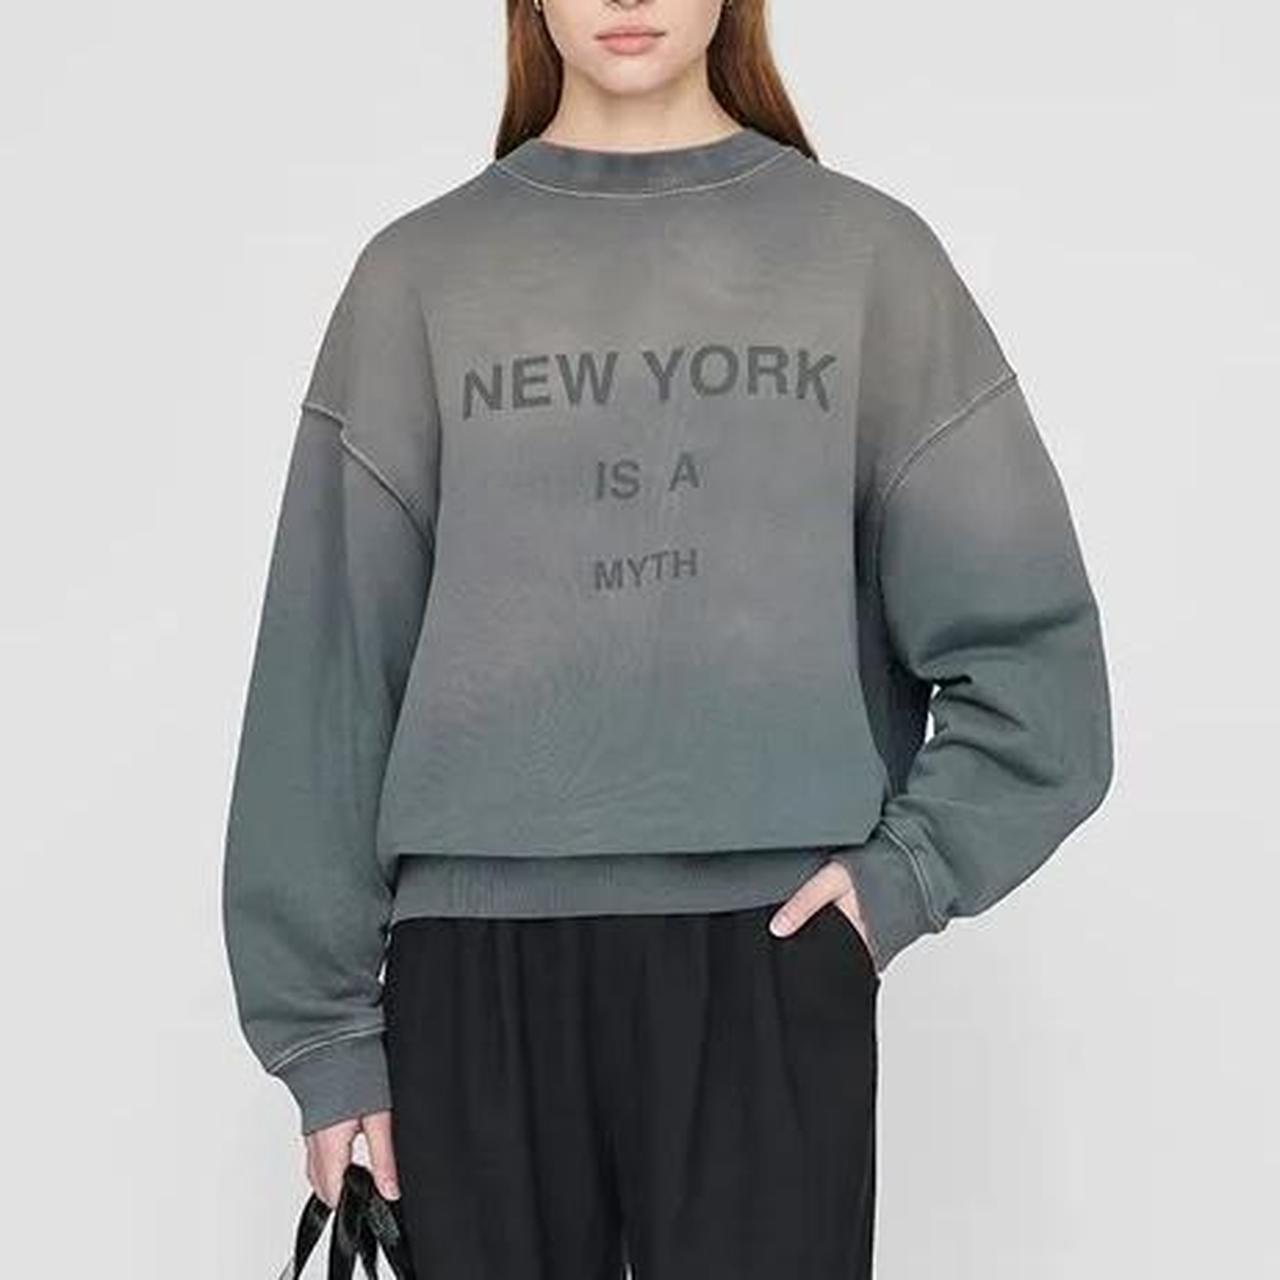 Anine Bing New York is a Myth Crewneck / Sweatshirt... - Depop